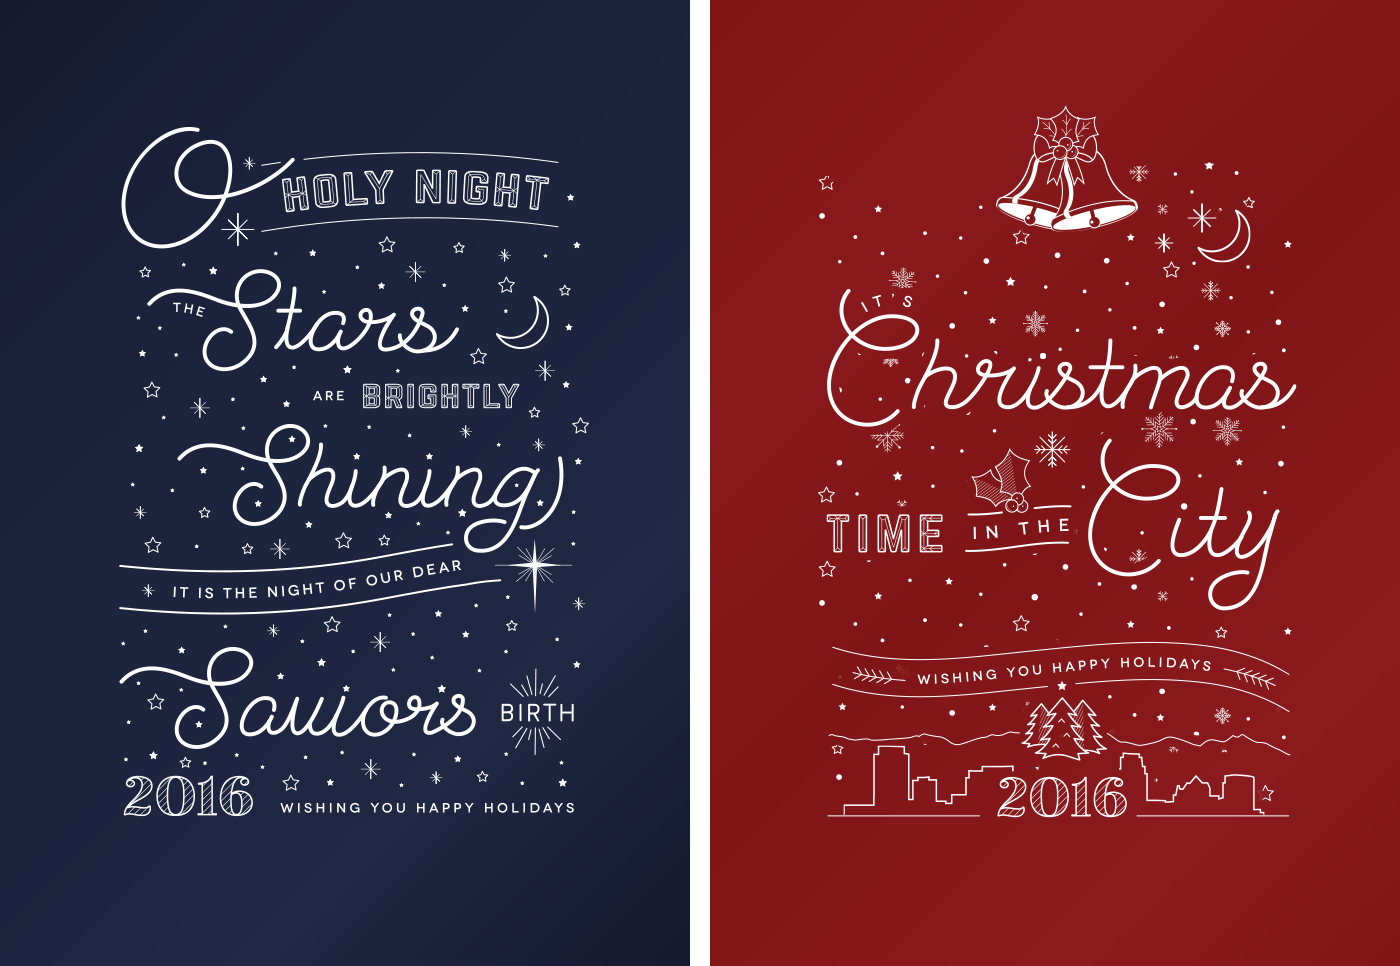 merry Christmas card season greetings Lyrics lettering icons colors inspire